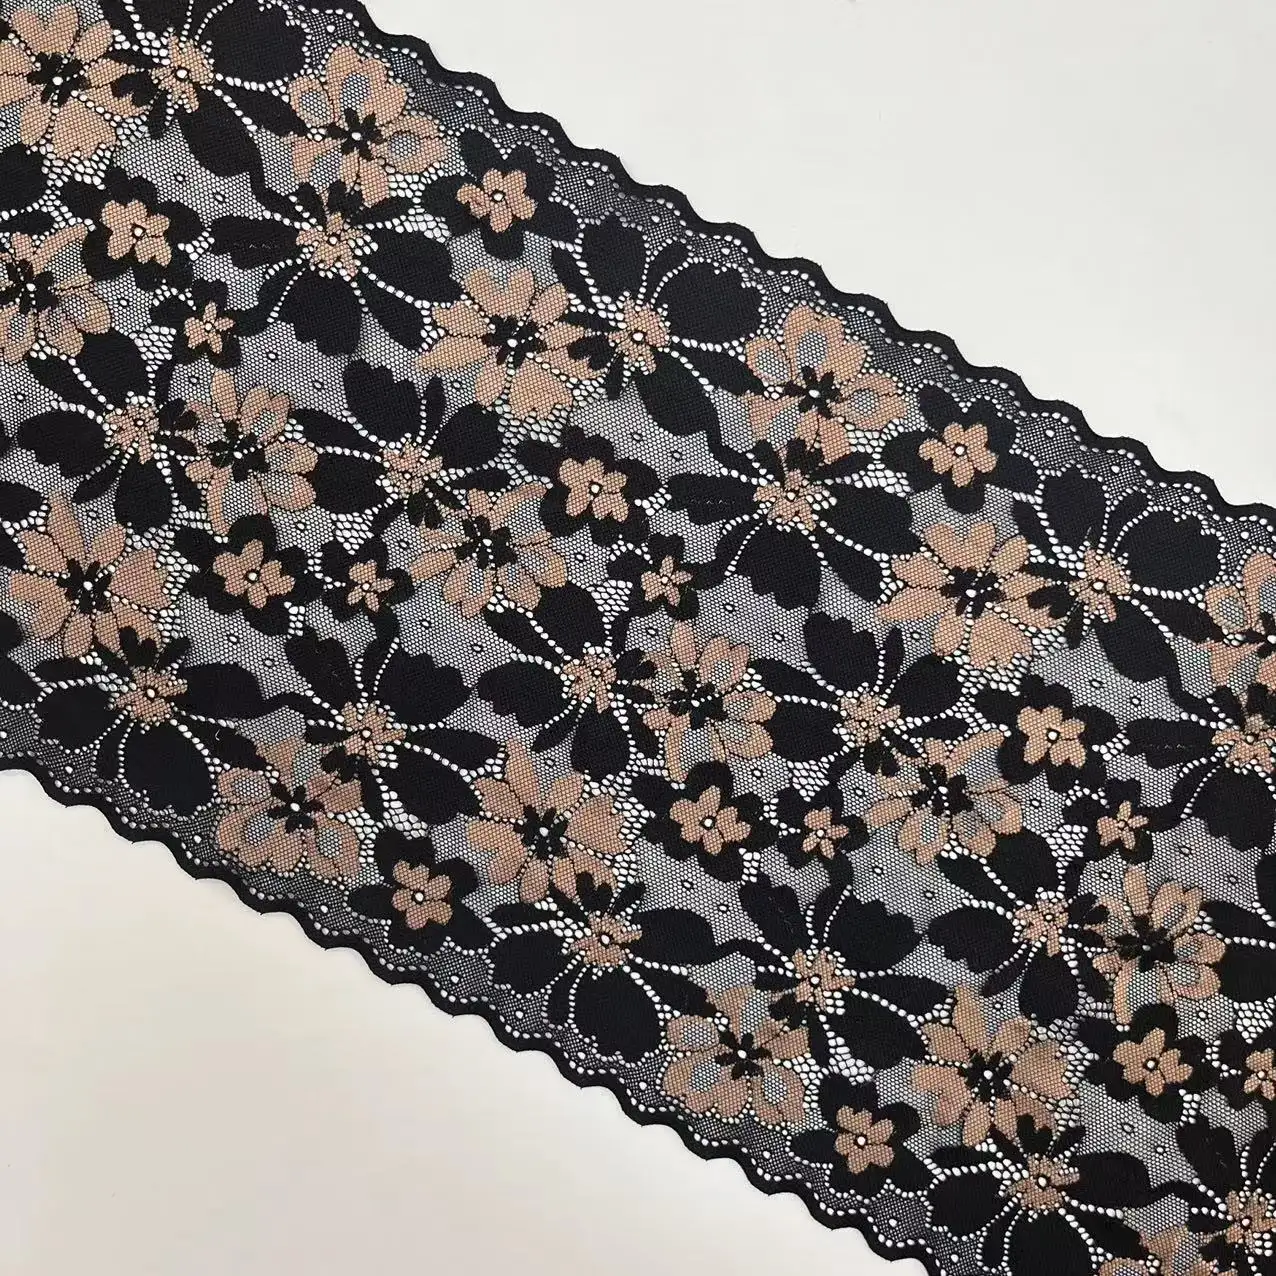 V1889 22 cm bicolor elastic lace trim Nylon Spandex galloon lace for dress lingerie underwear clothing accessories